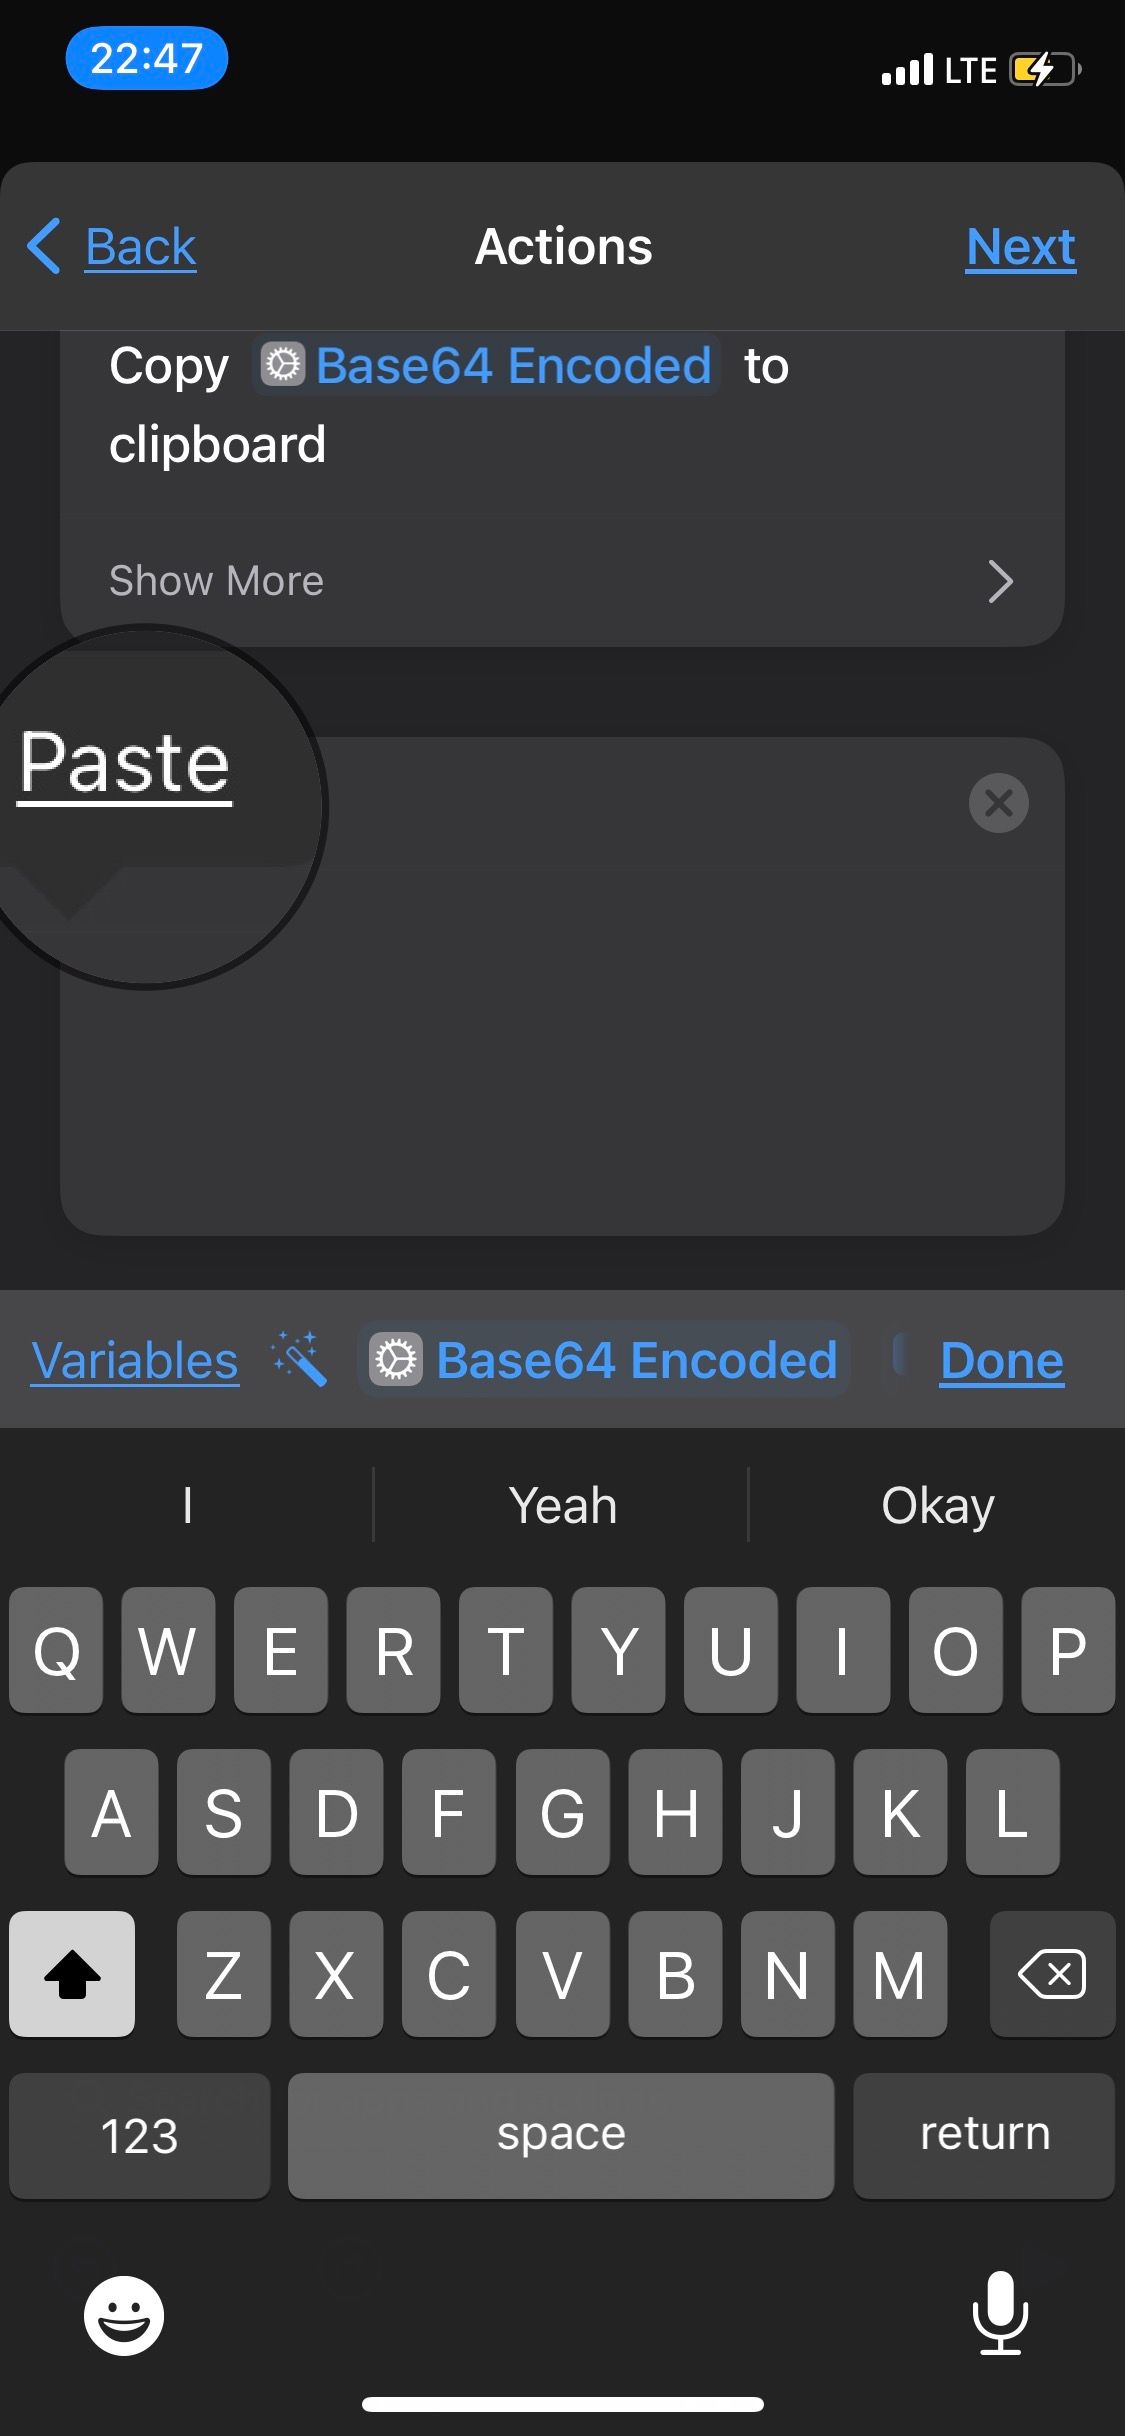 Paste option in Shortcuts app.